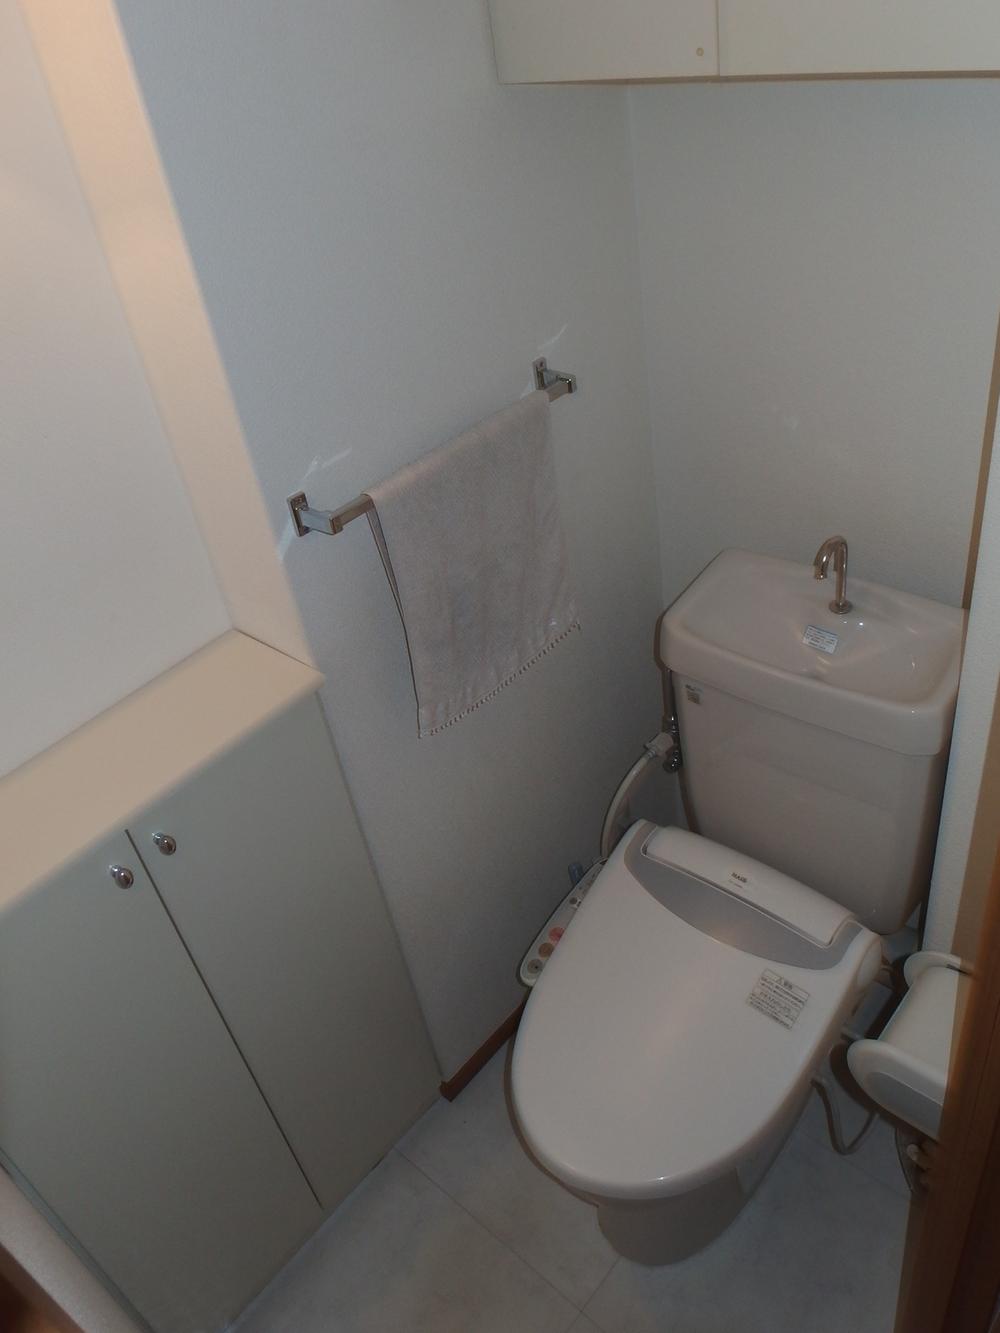 Toilet. (2013 December shooting)